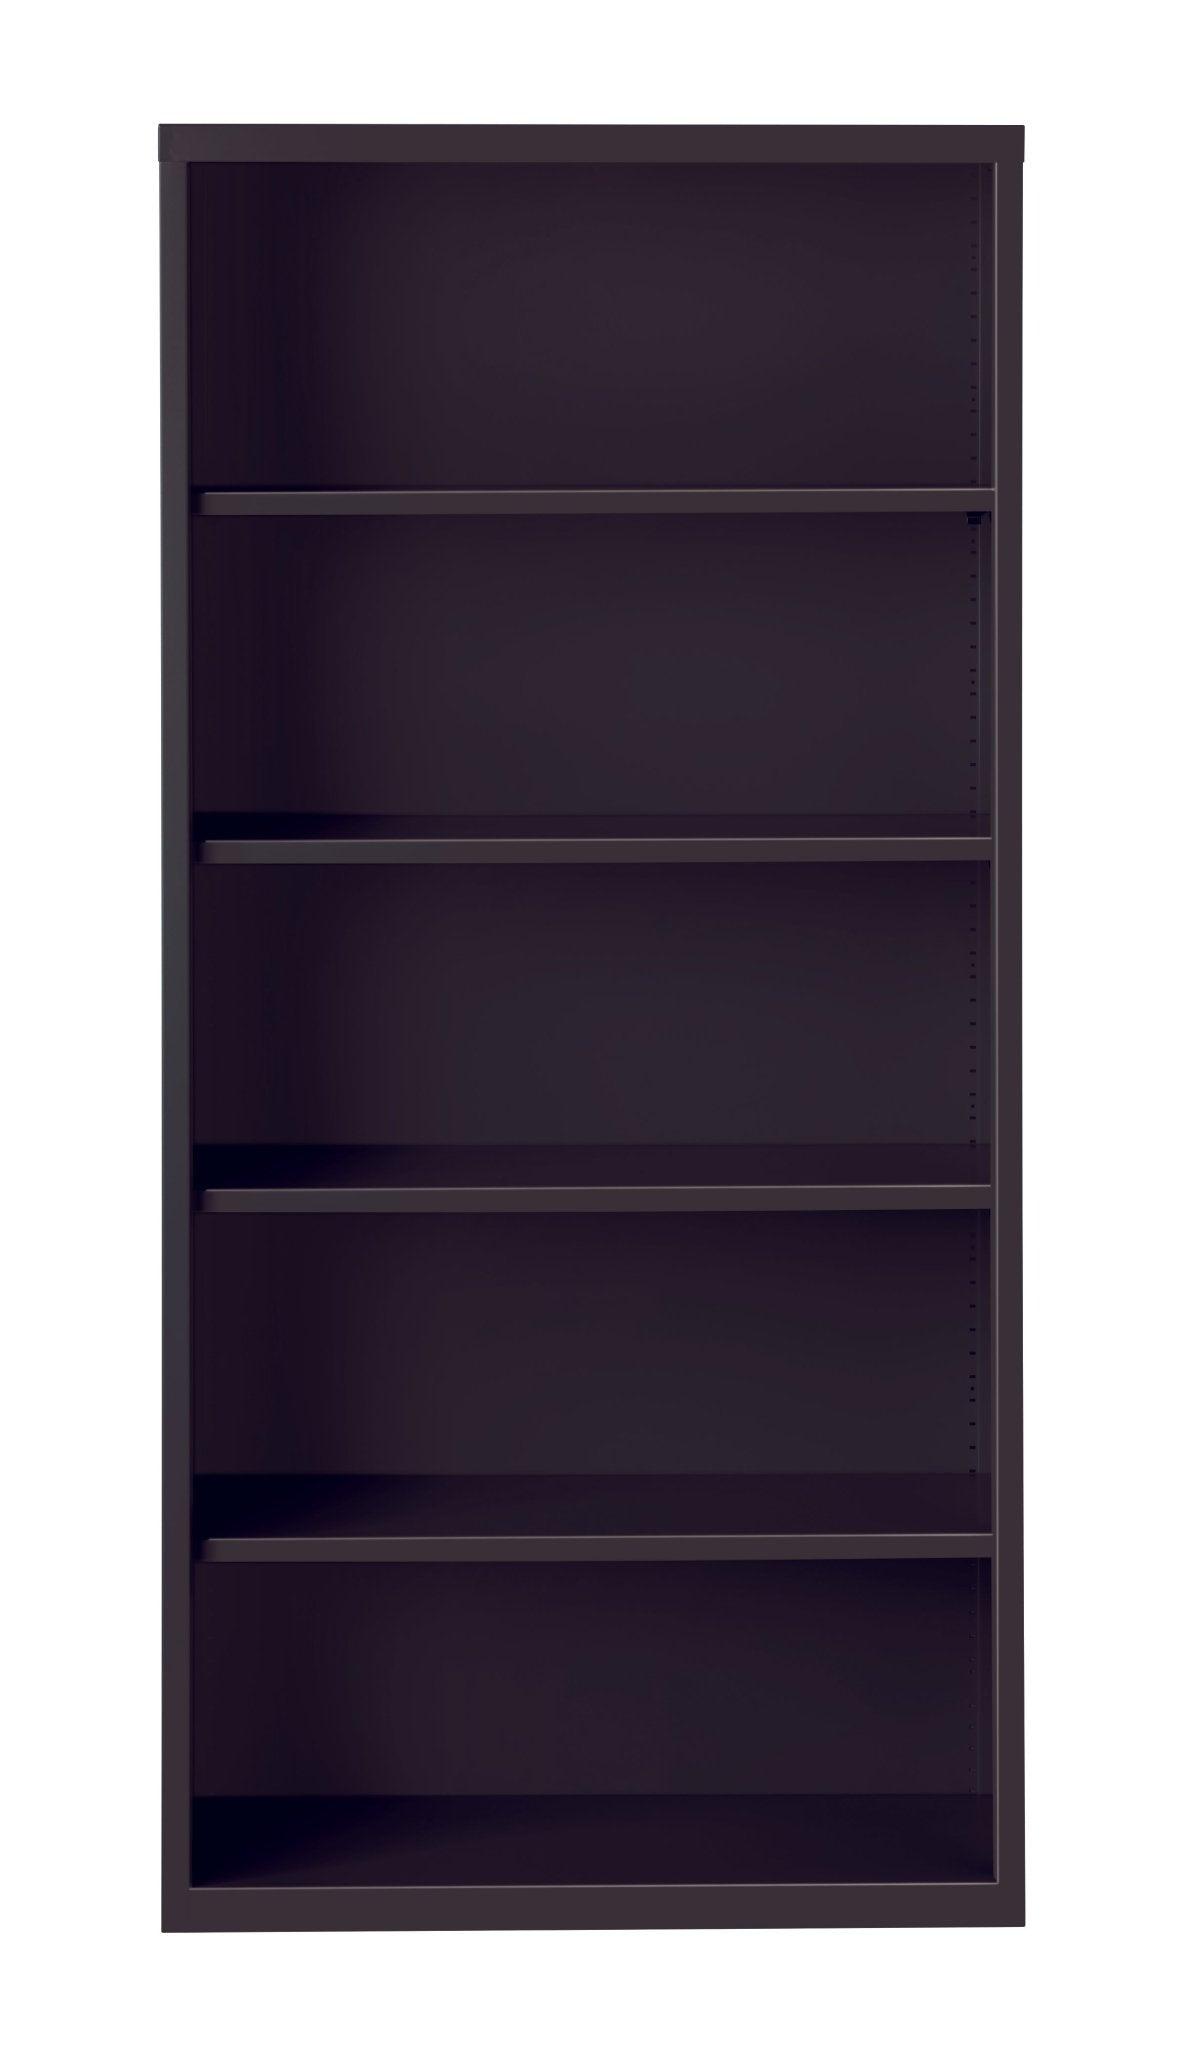 Hirsh 5 Shelf Metal Bookcase, 72in. Height - SchoolOutlet